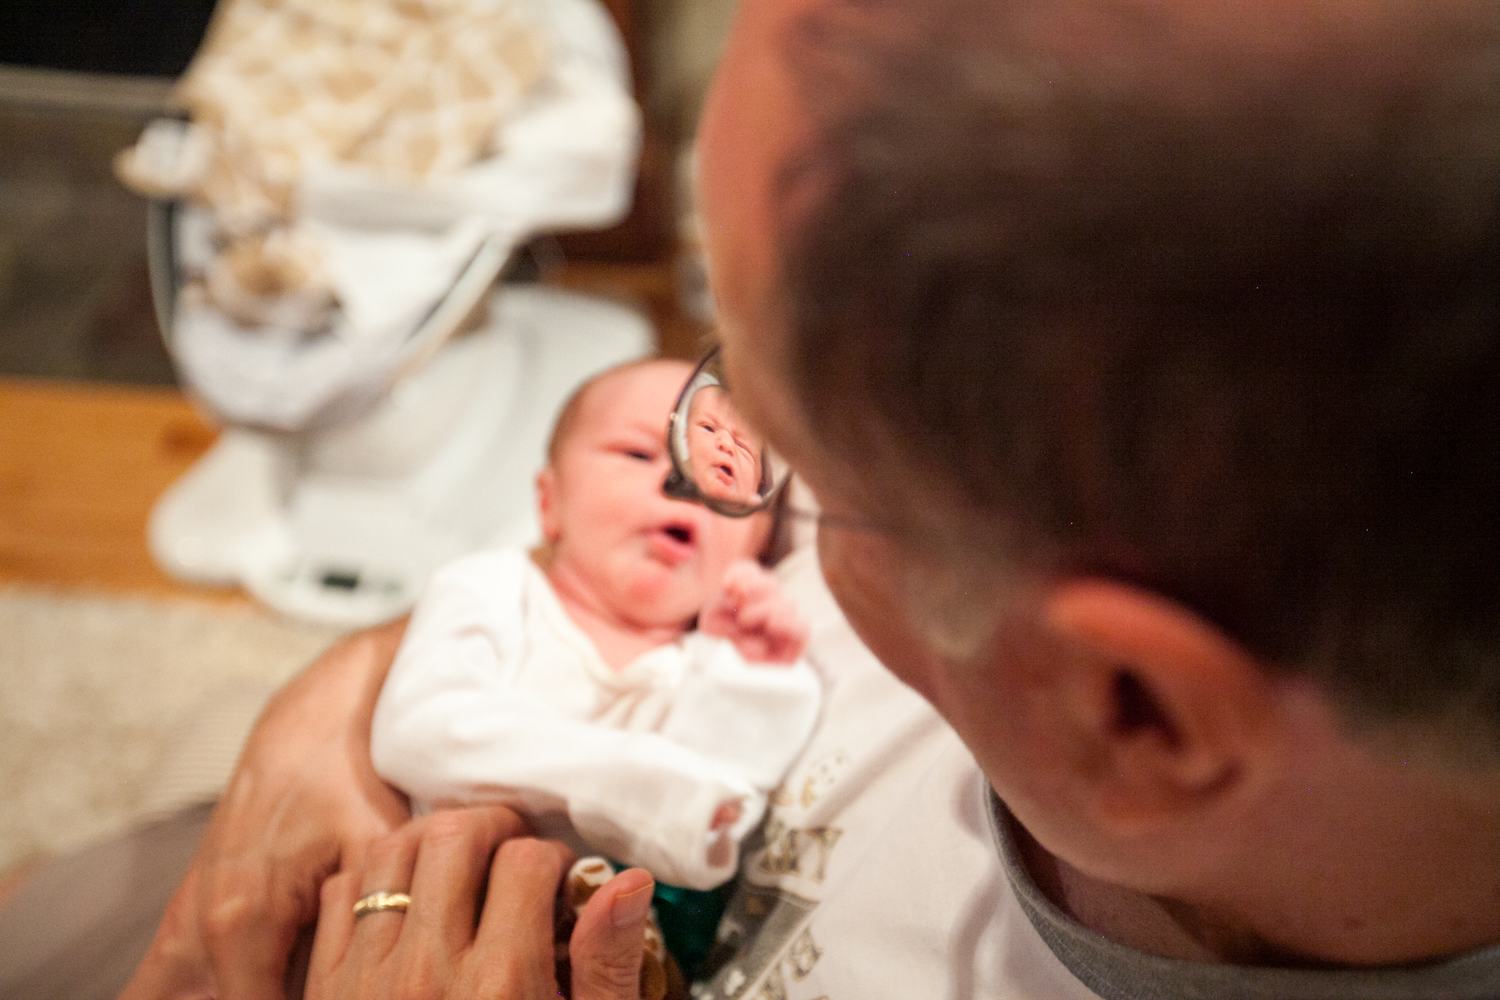 Editorial photographer Eric Kruszewski photographs his family and newborn nephew.